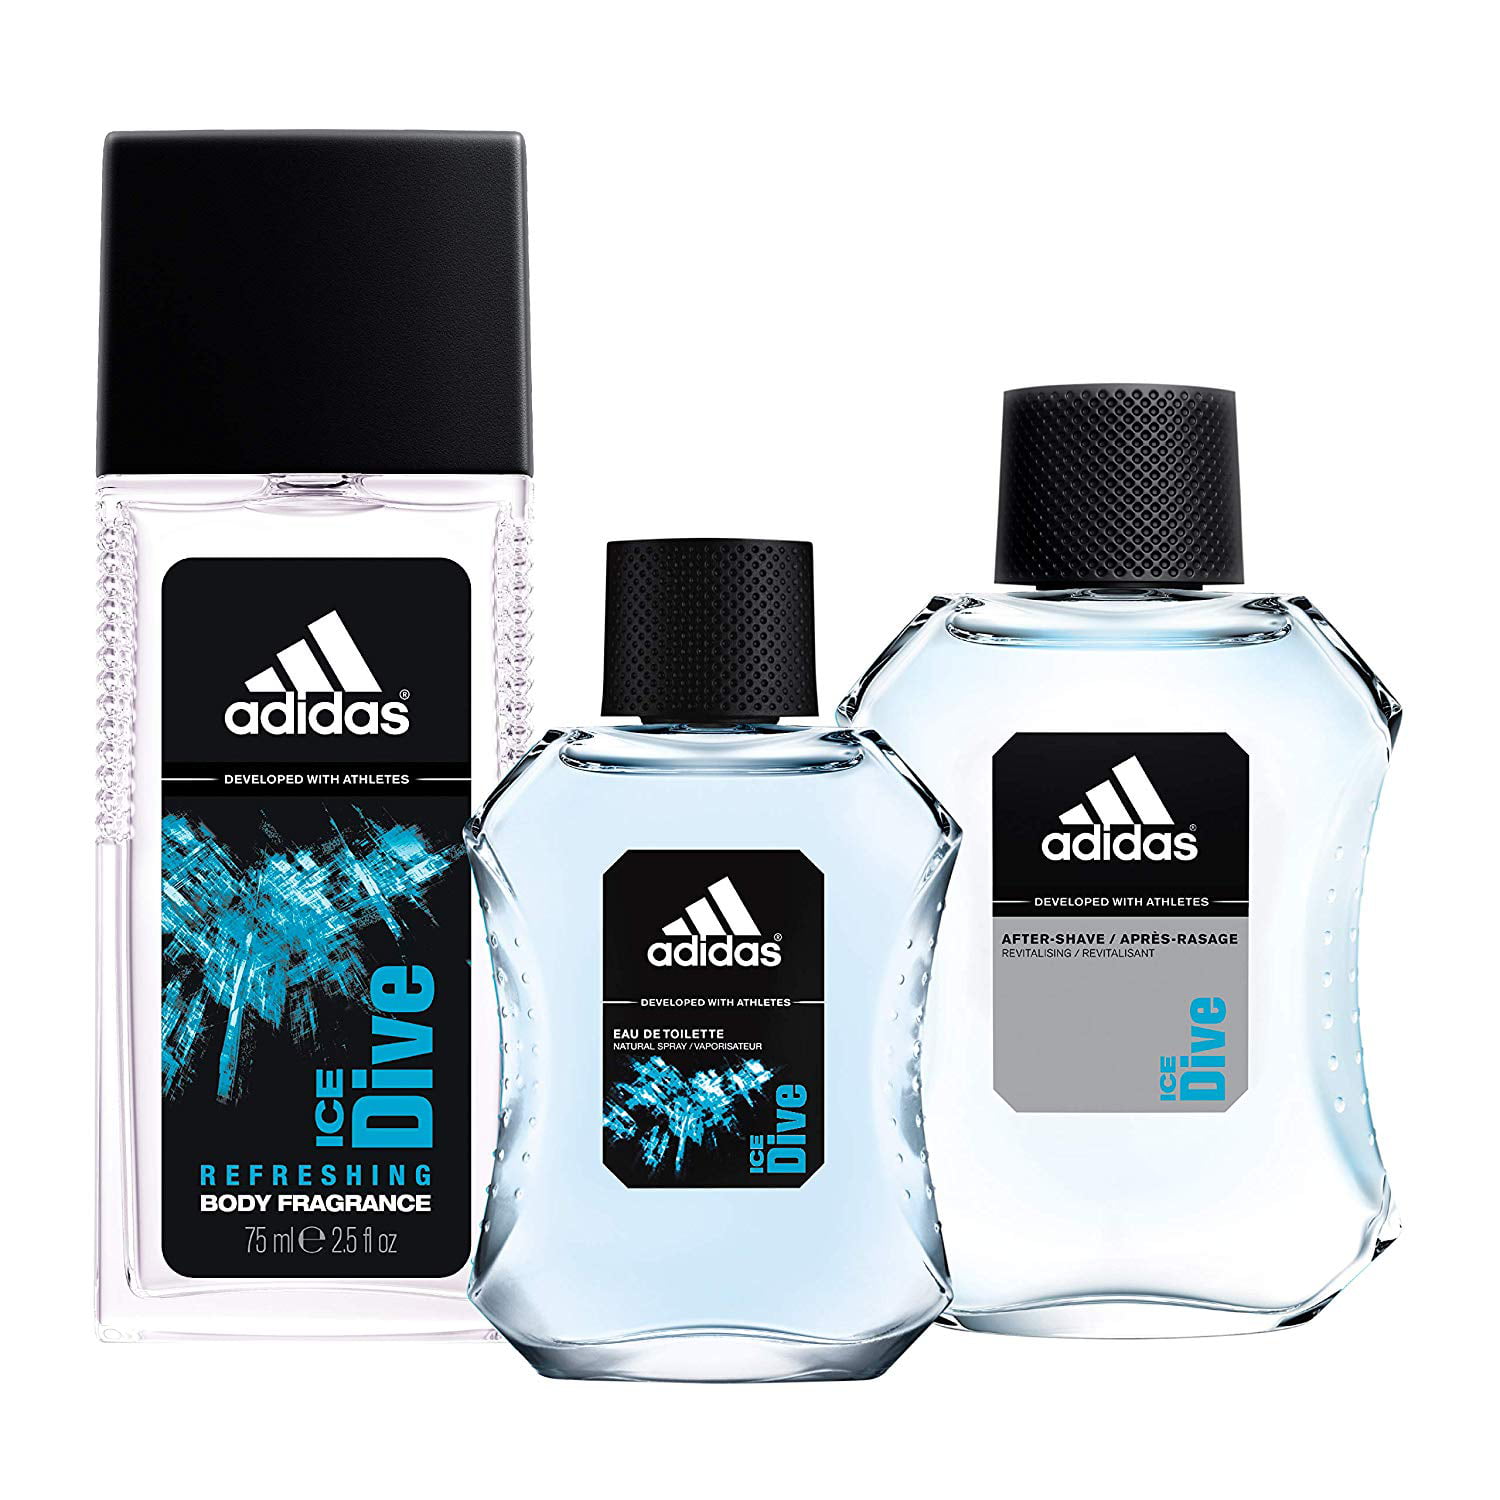 Cologne Ice Dive Body Fragrance, After-Shave, Eau Toilette 3-Piece Men's Aromatic Fragrance Set